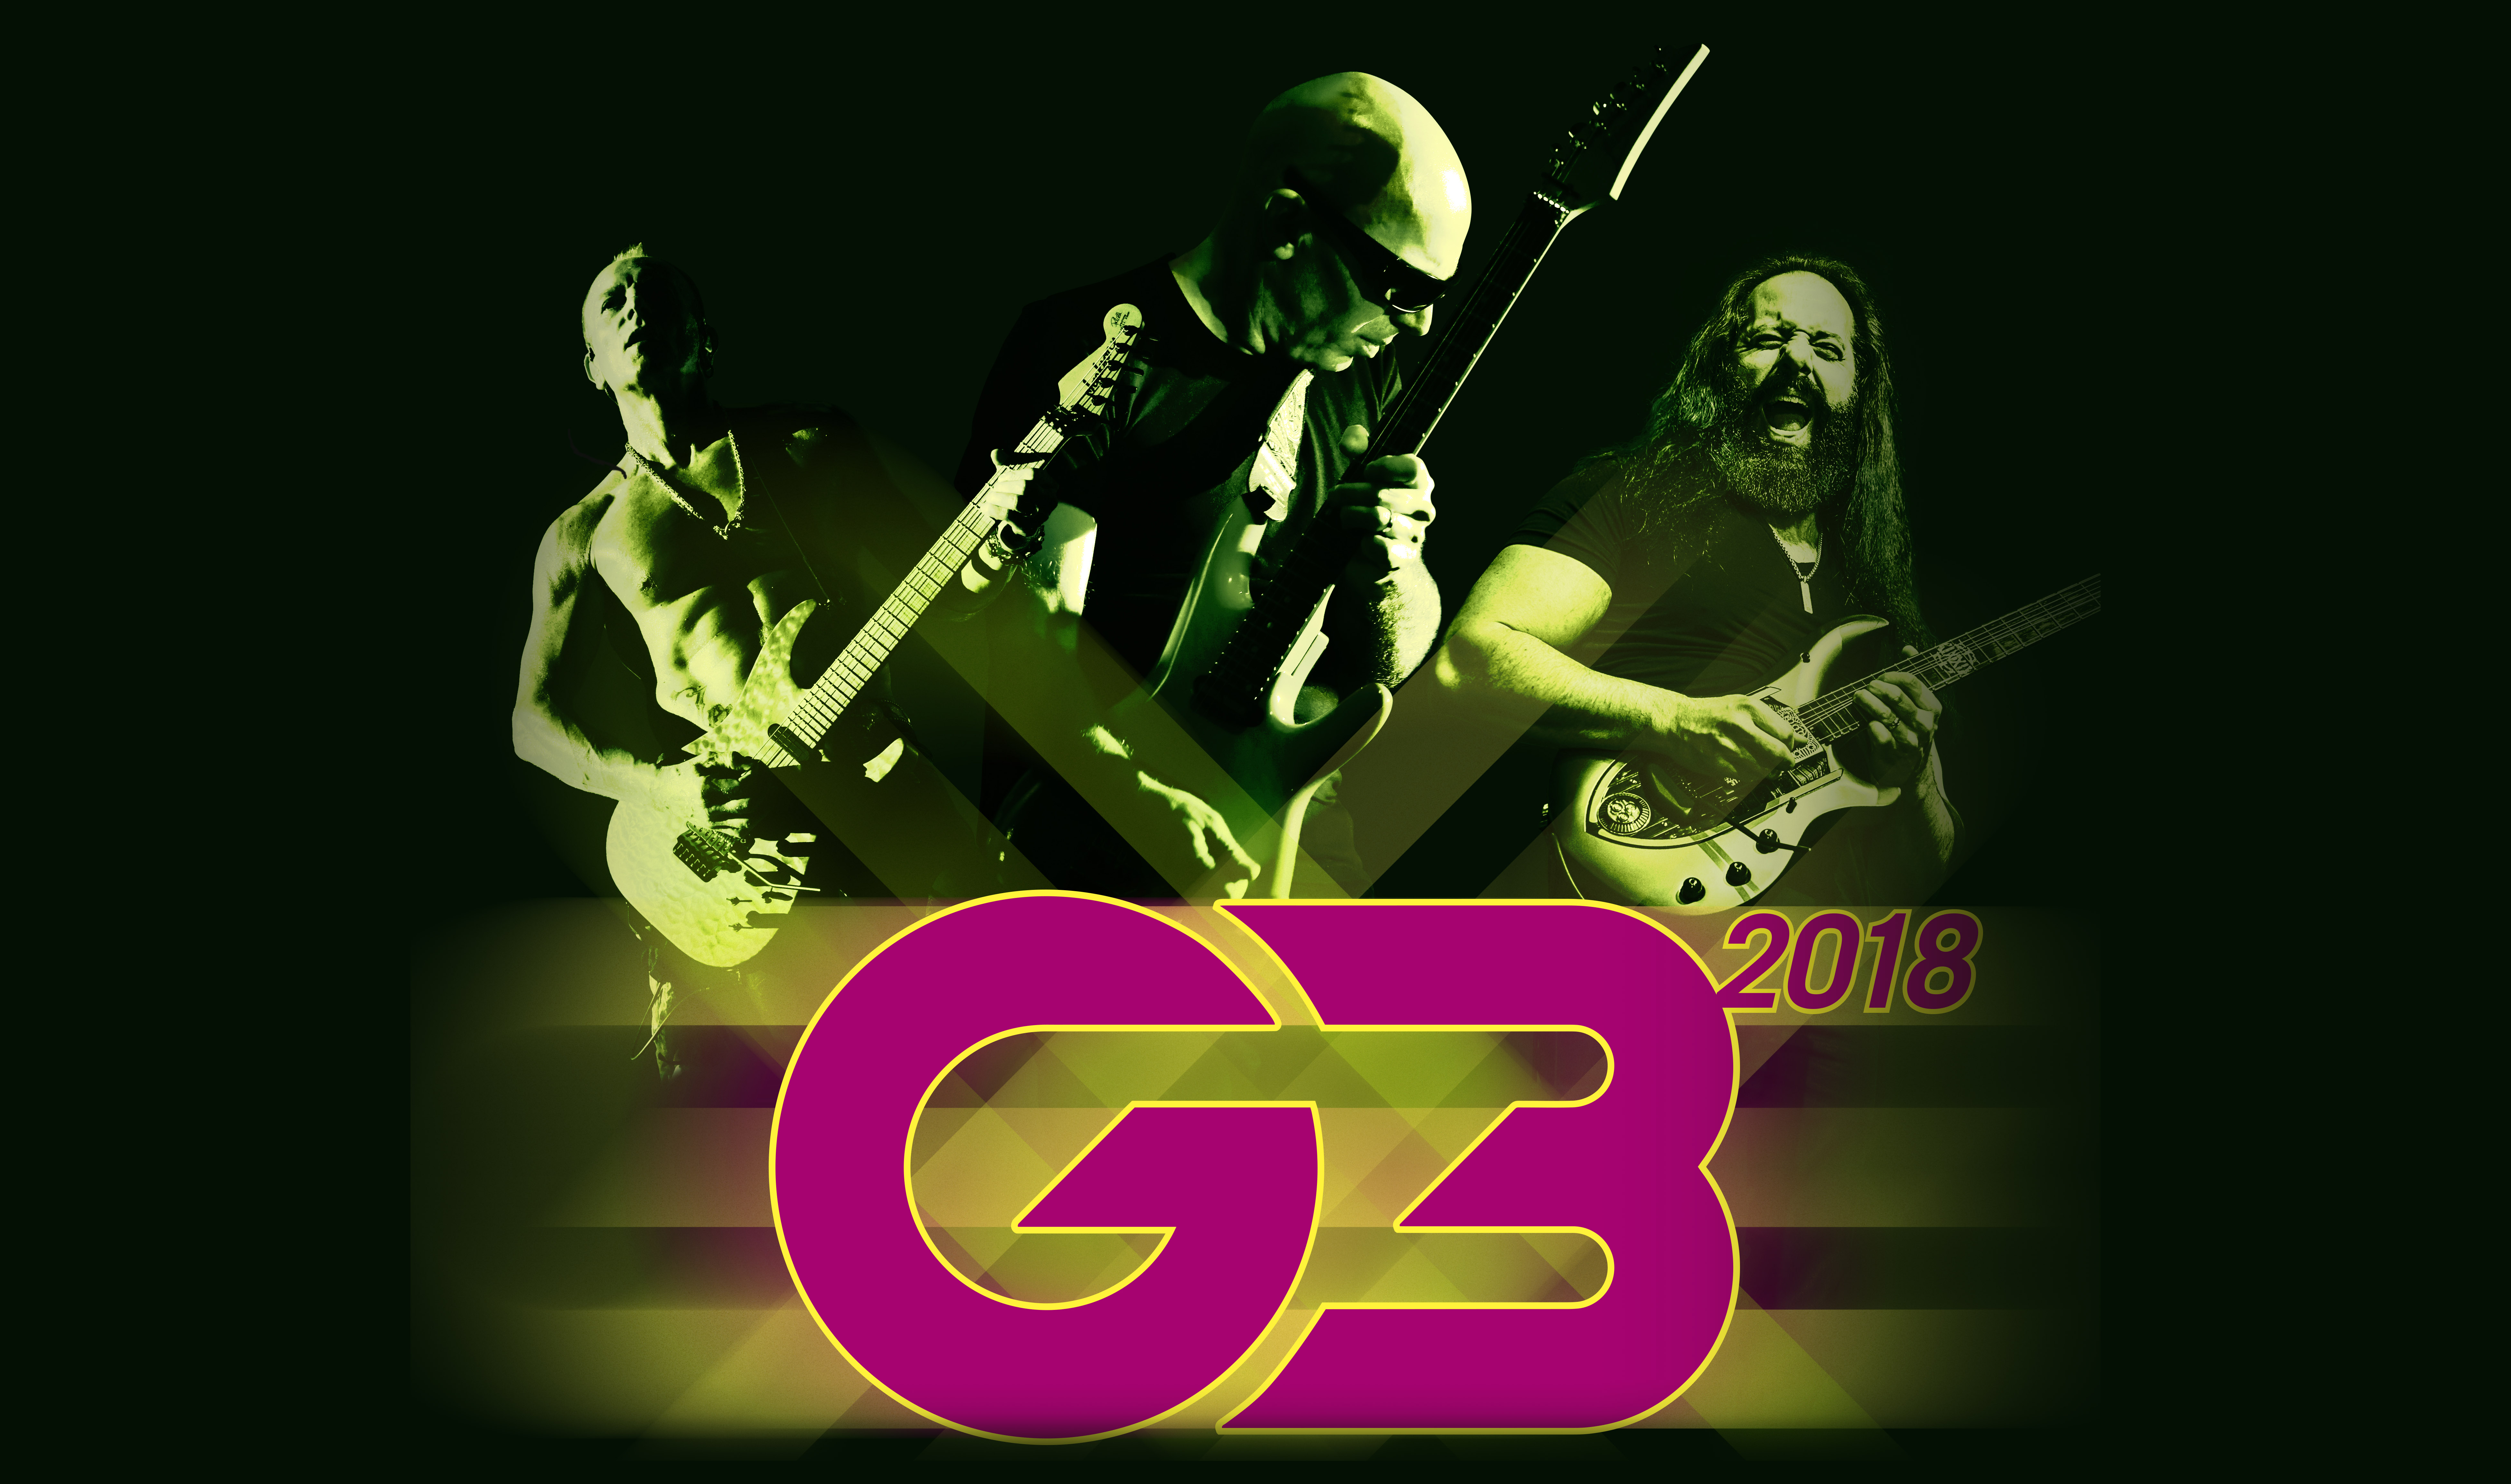 Concert Preview: G3 featuring Joe Satriani, John Petrucci, and Phil Collen